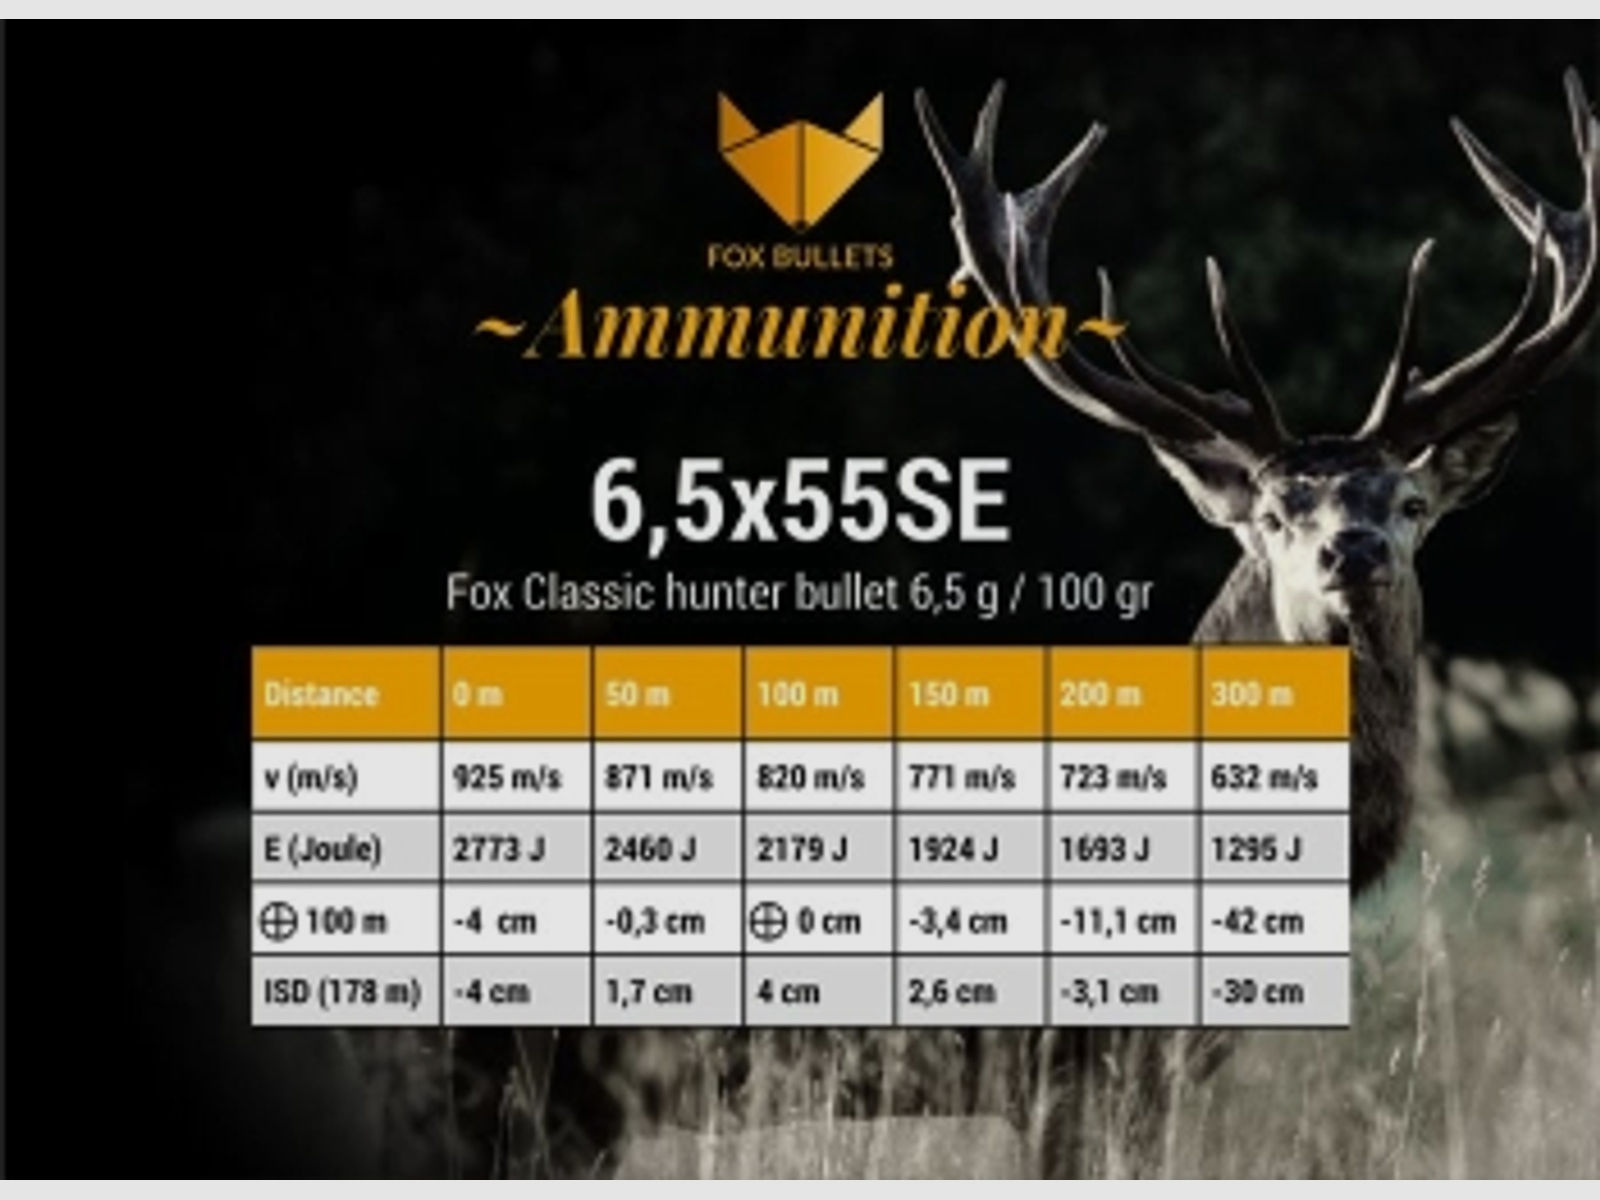 Fox Bullets Classic Hunter 6,5x55 SE 100GR / 6,5g bleifrei 20 Patronen